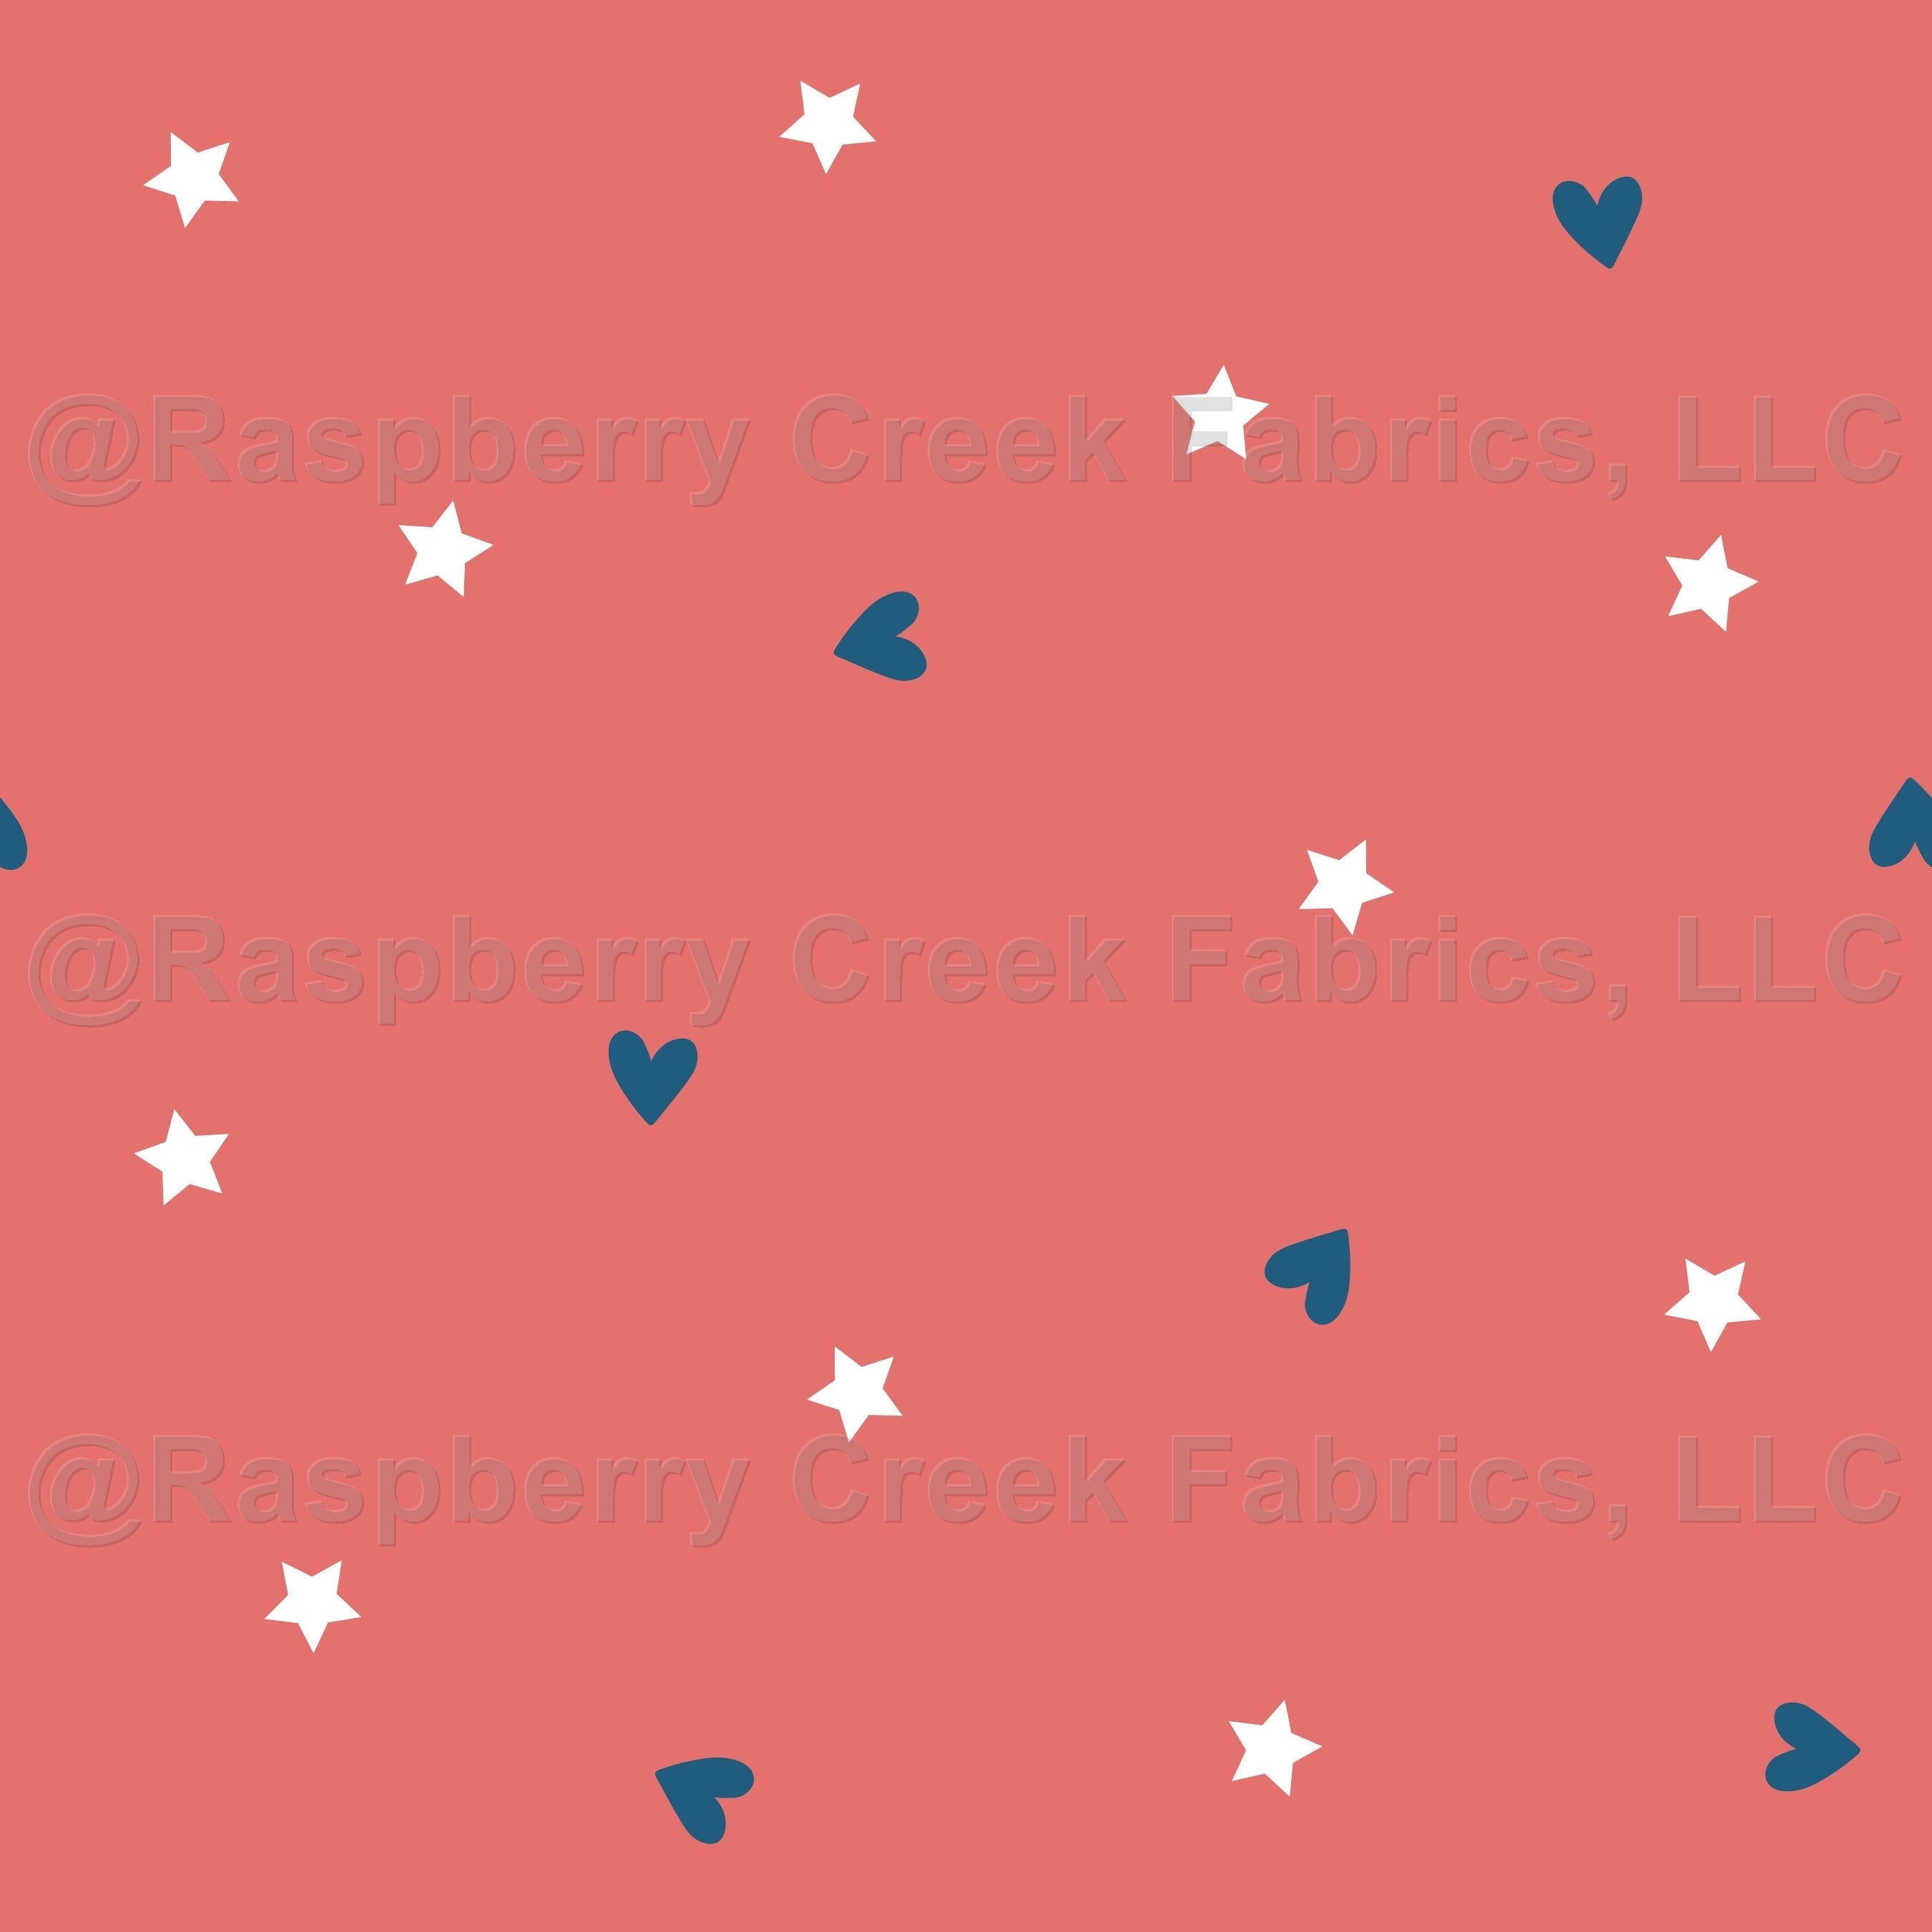 stars and hearts on punch Fabric, Raspberry Creek Fabrics, watermarked